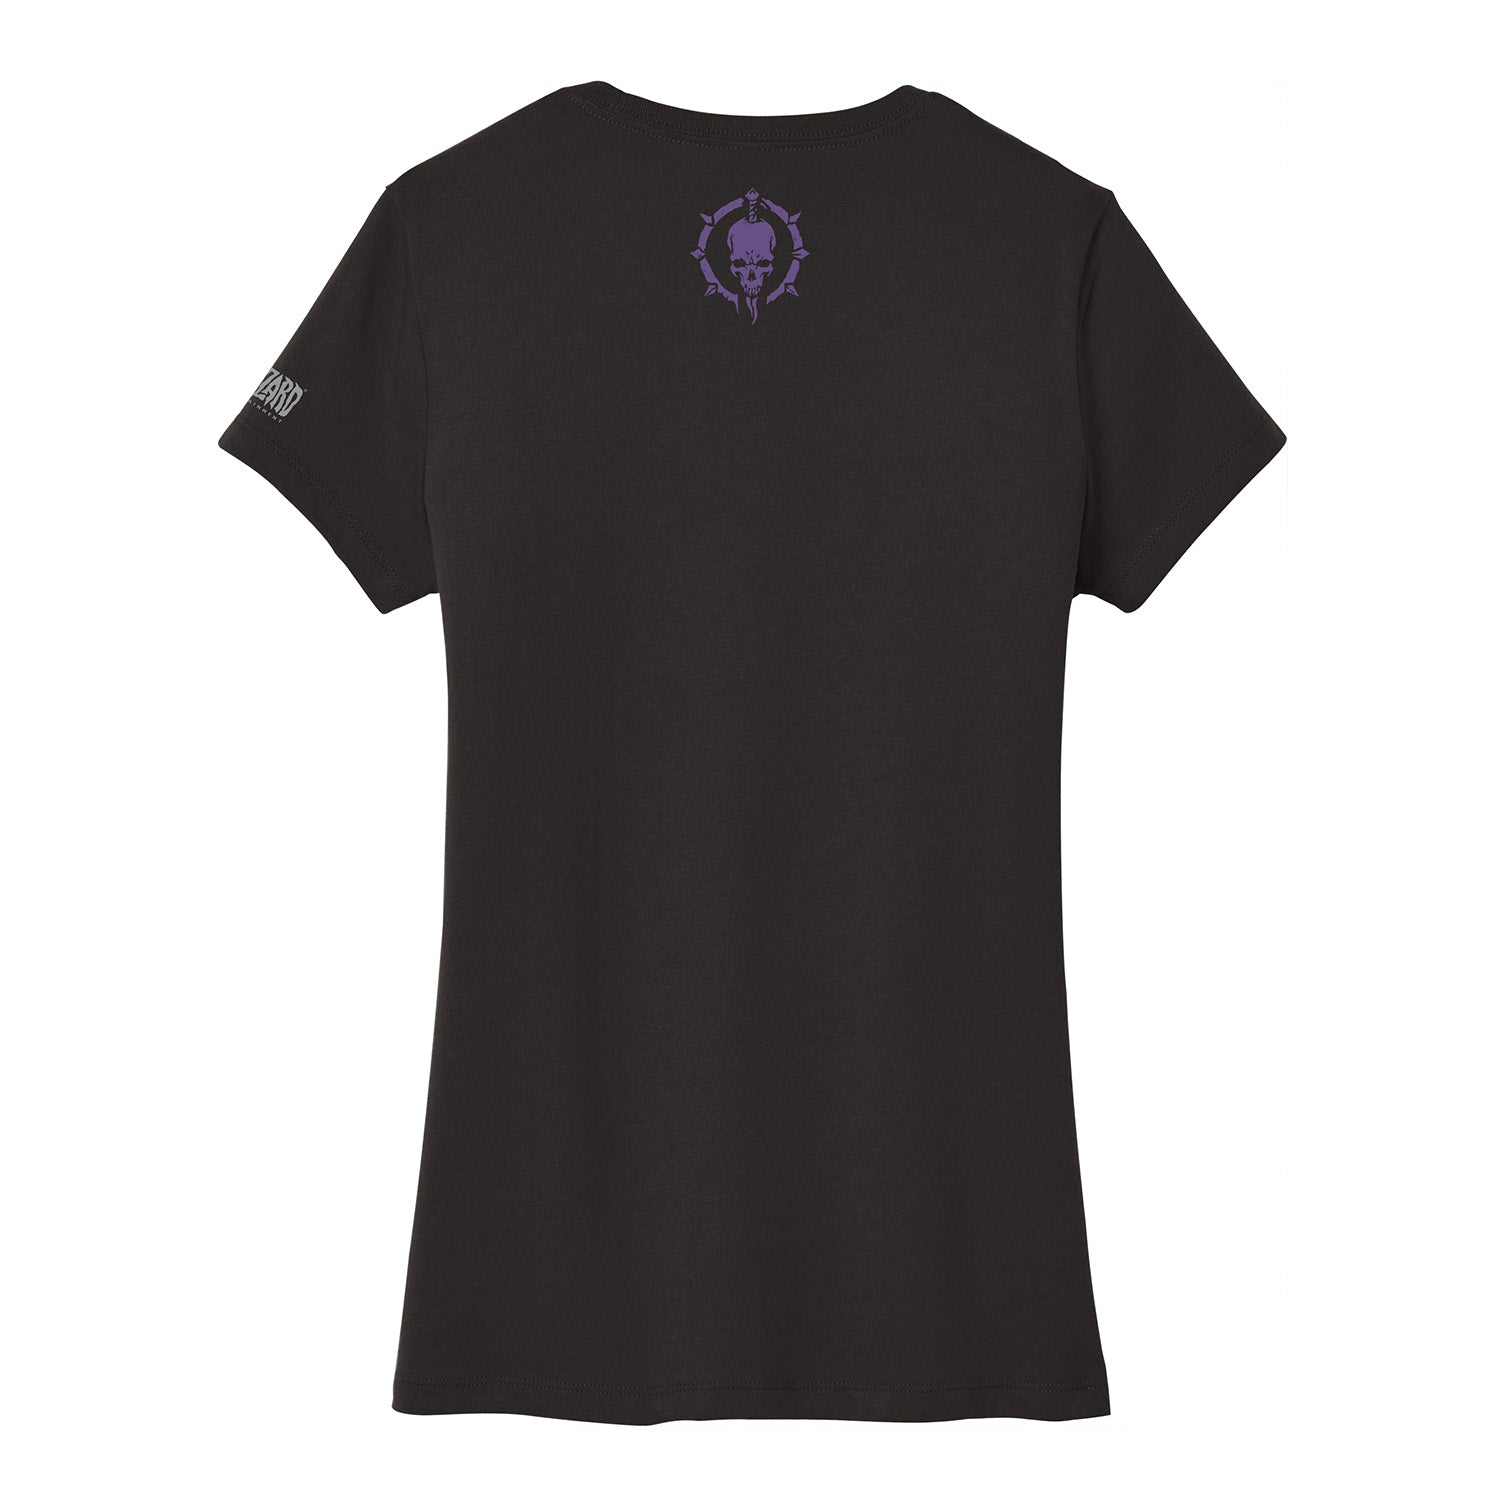 Diablo IV Necromancer Women's Black T-Shirt - Back View